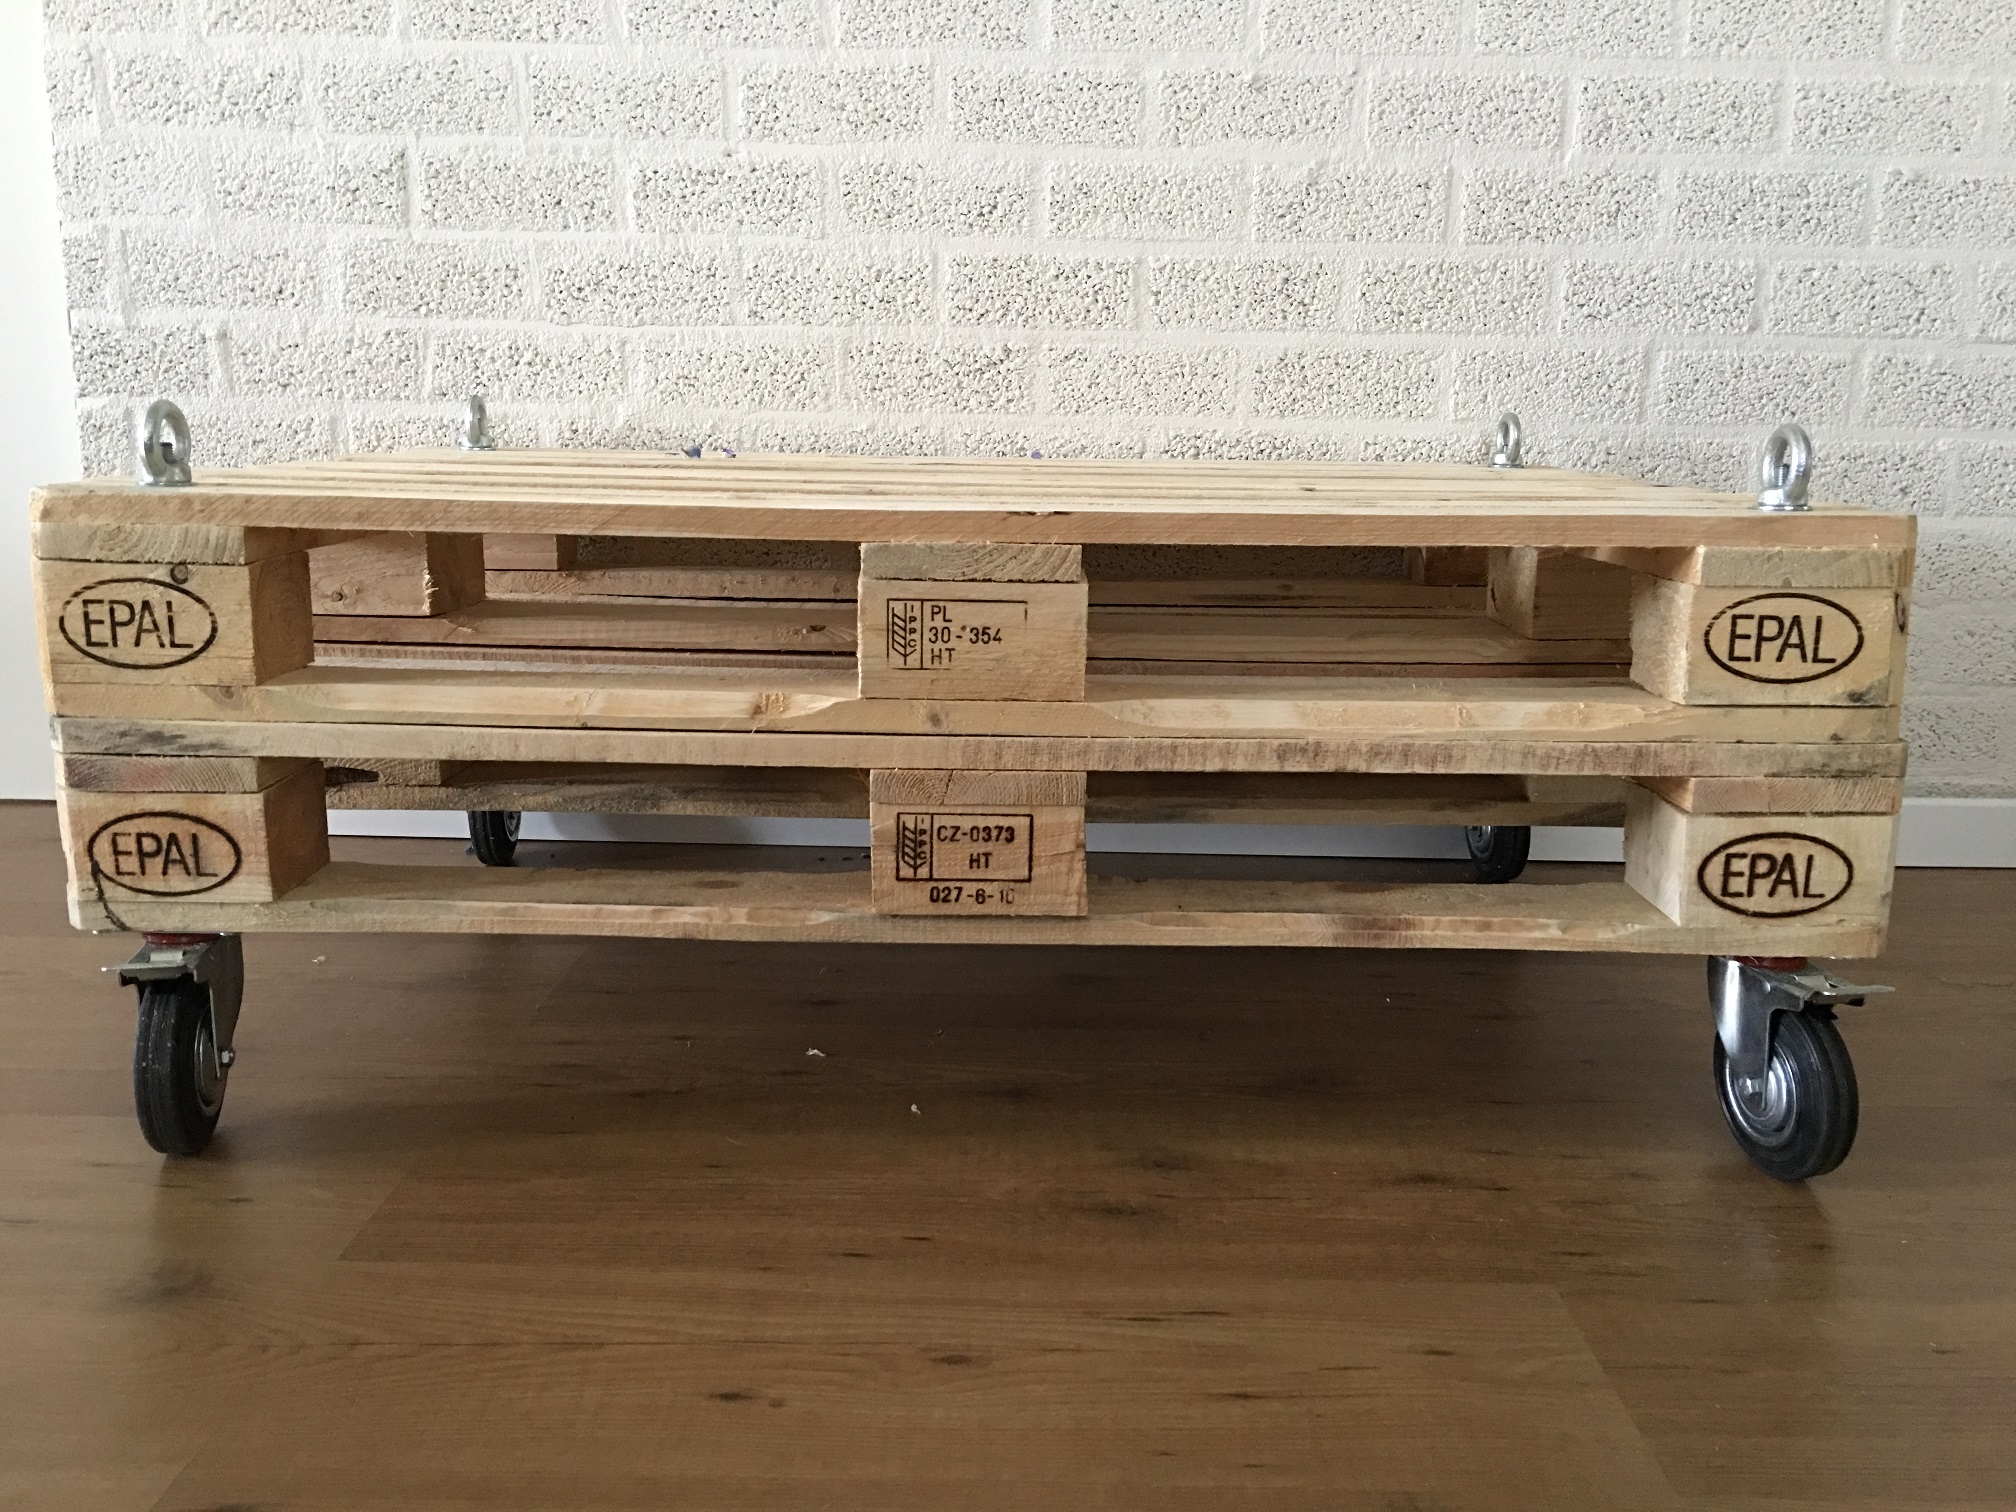 Prachtige basismodel pallethouten industriële tafel op 4 zwenkwielen met rem